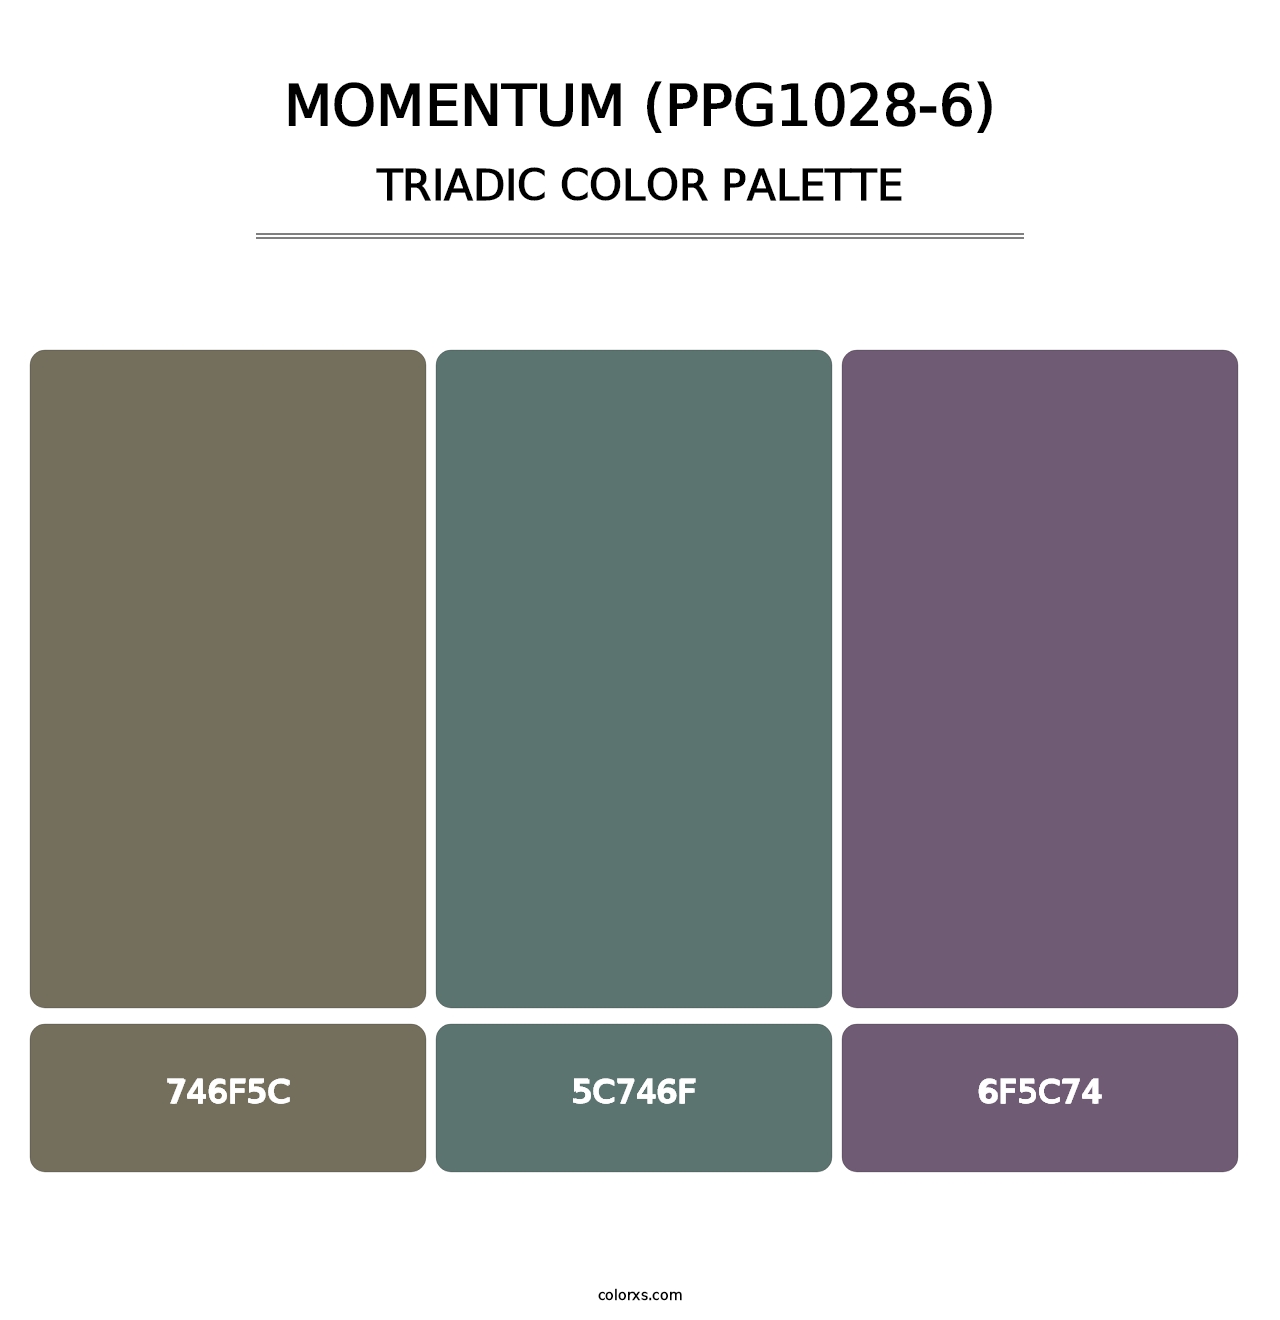 Momentum (PPG1028-6) - Triadic Color Palette